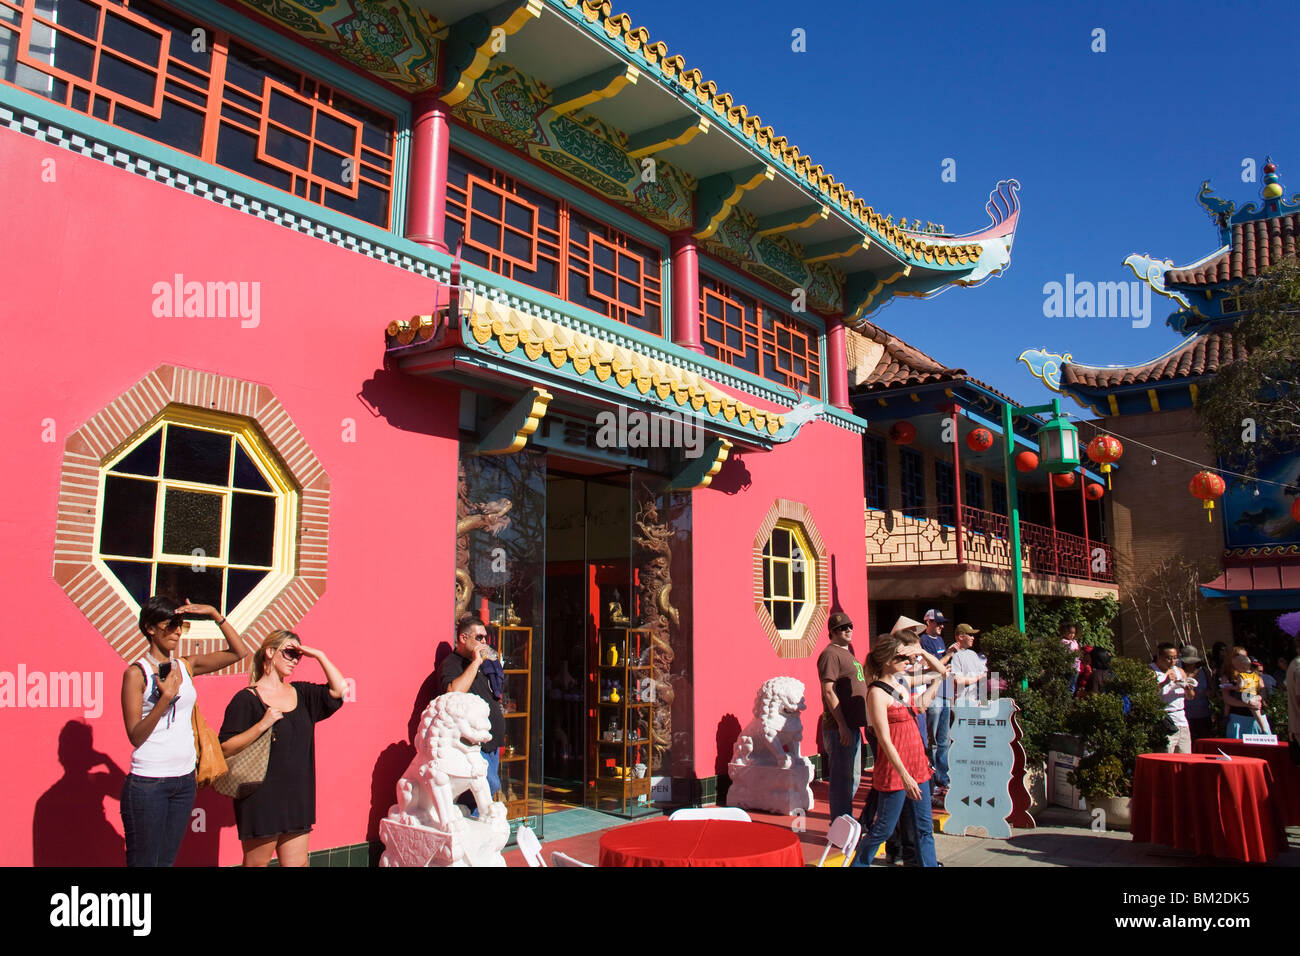 Chinese architecture, Chinatown, Los Angeles, California, USA Stock Photo